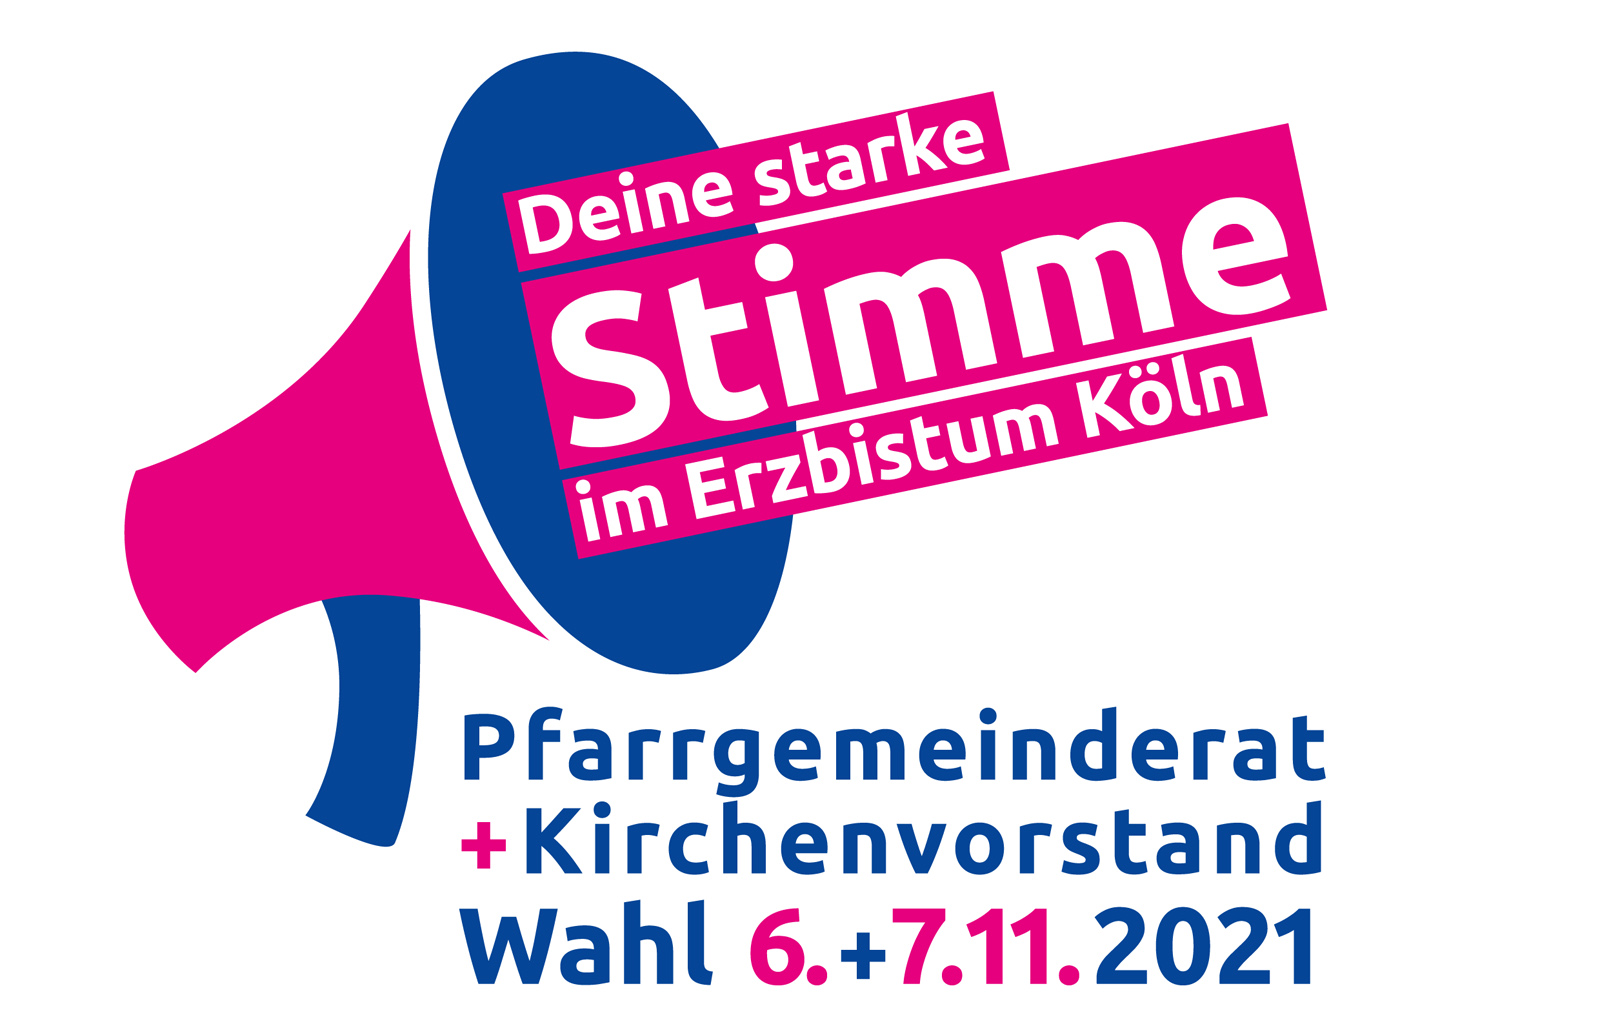 pgr-kampagne-ebk-2021-logotype1